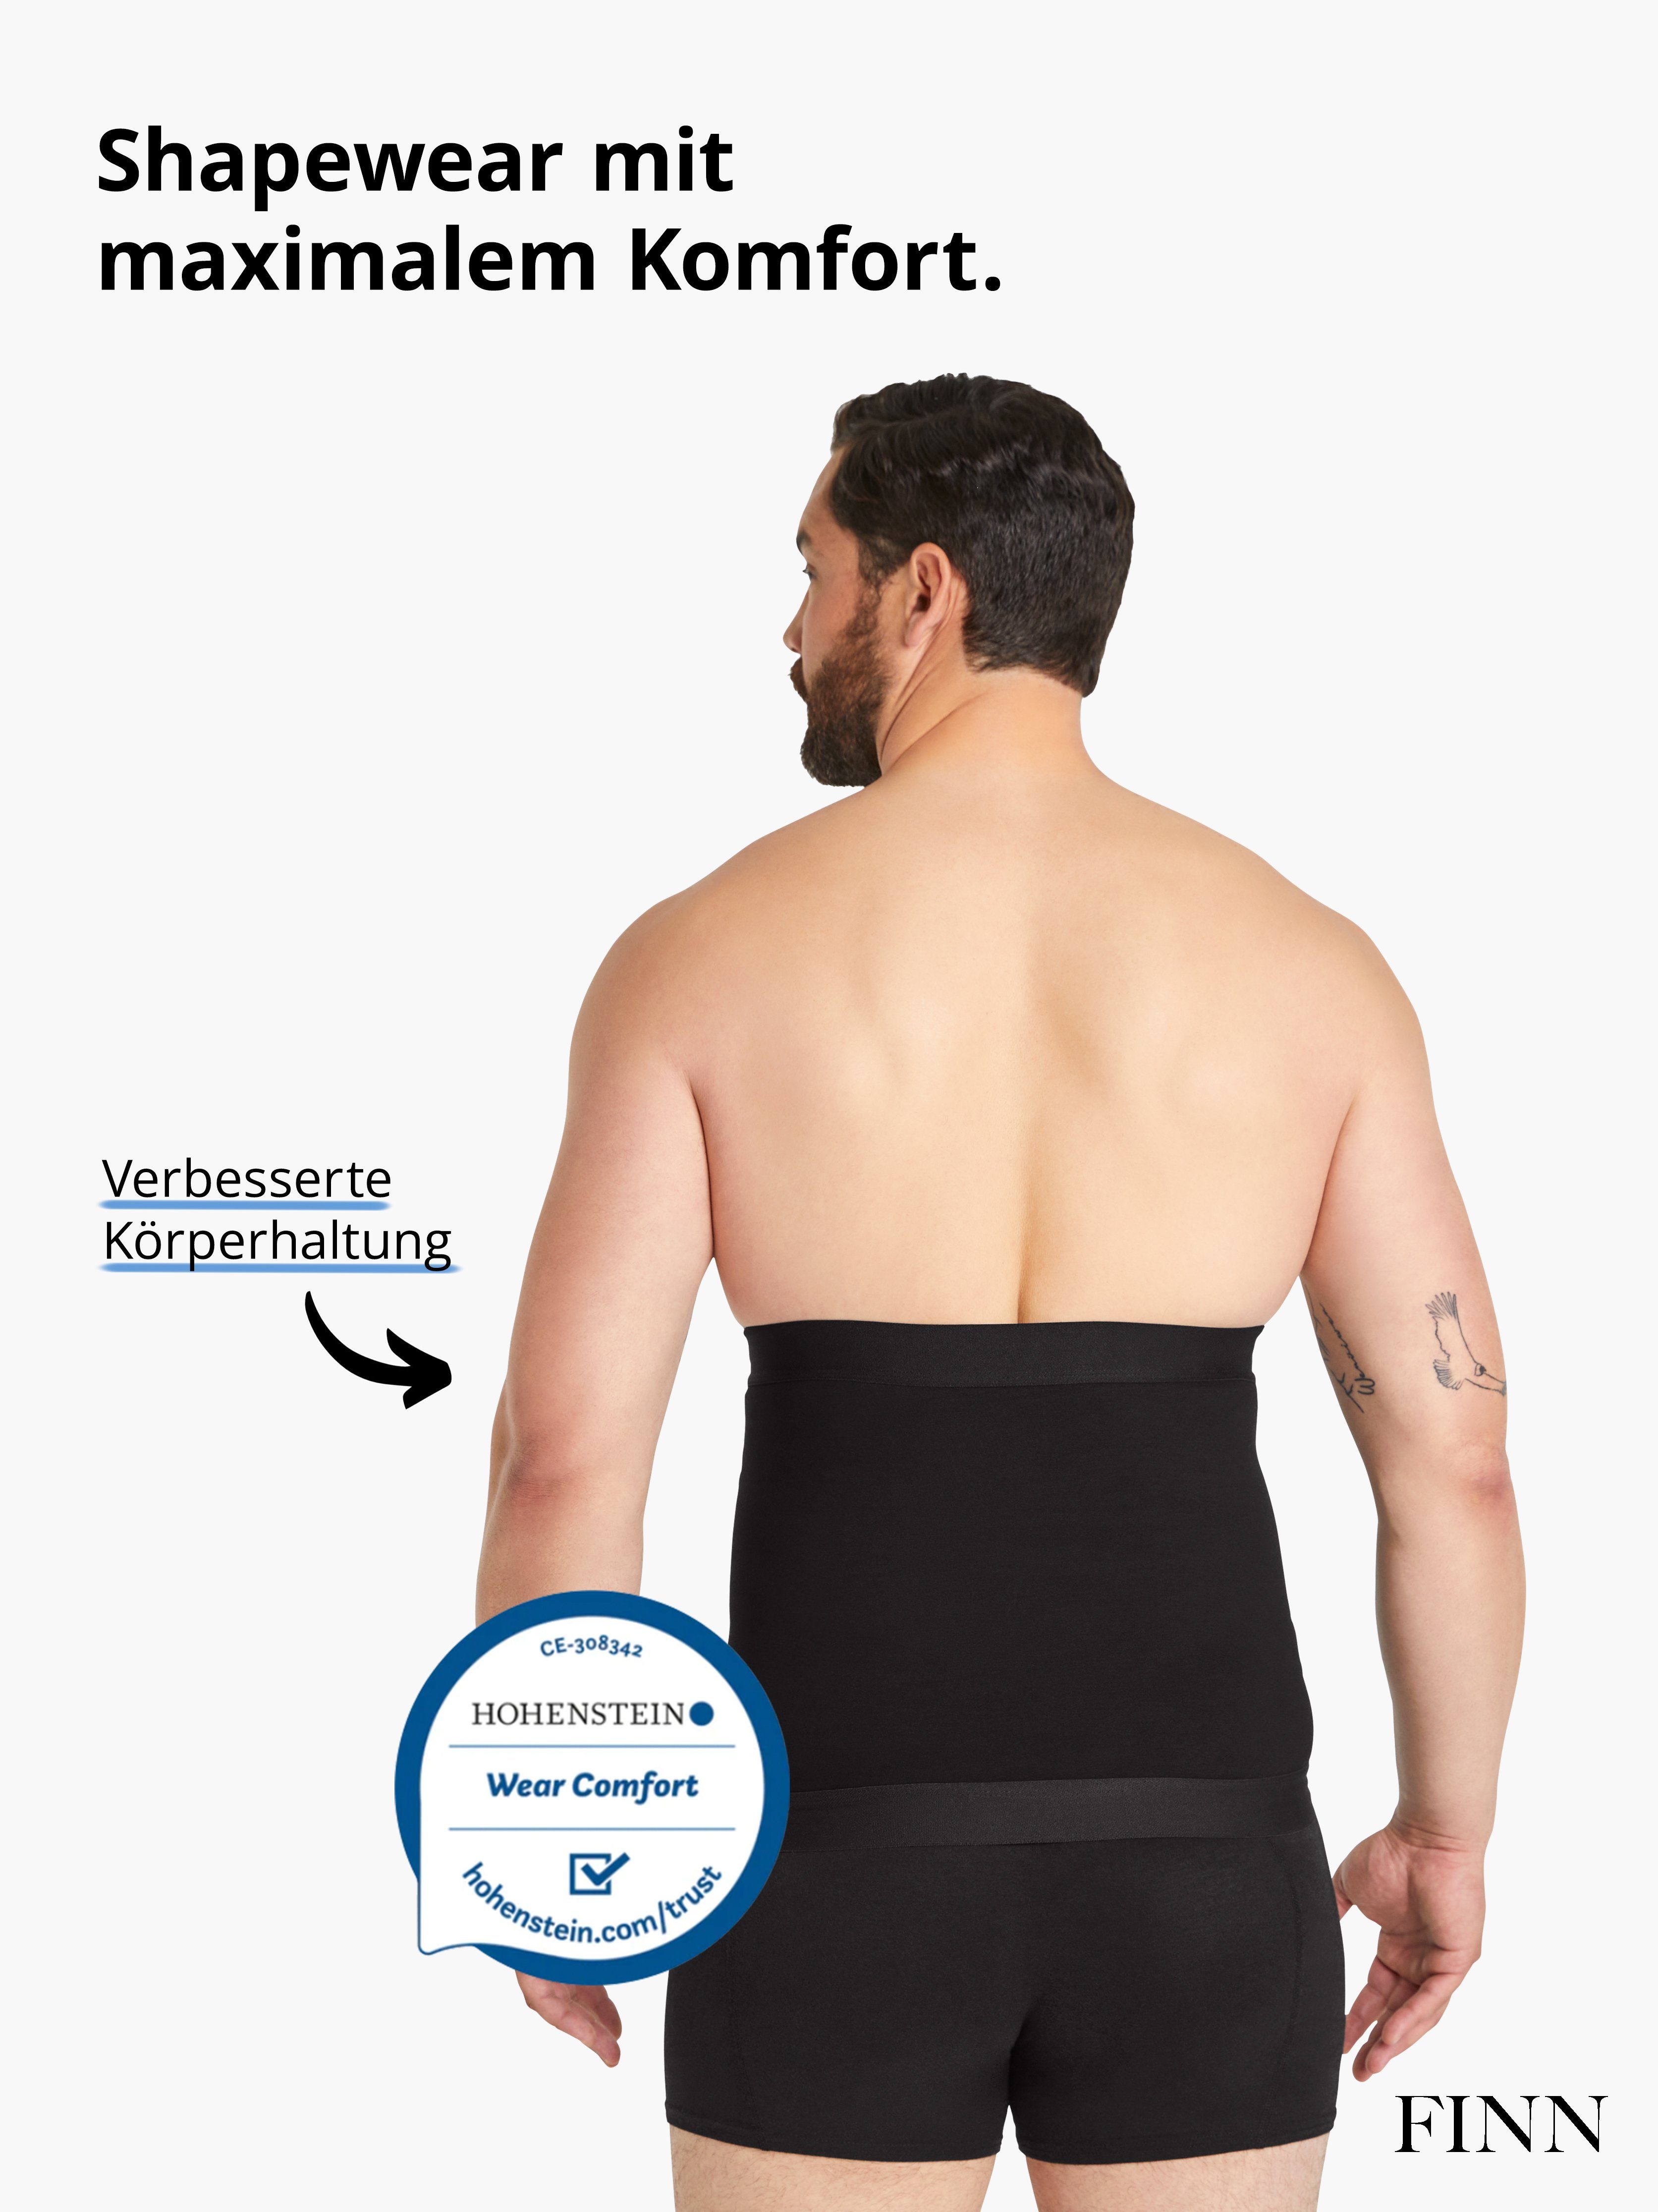 Schwarz Herren Design für Starker Männer Body-Shaper Kompressions-Gürtel FINN Shapinghose